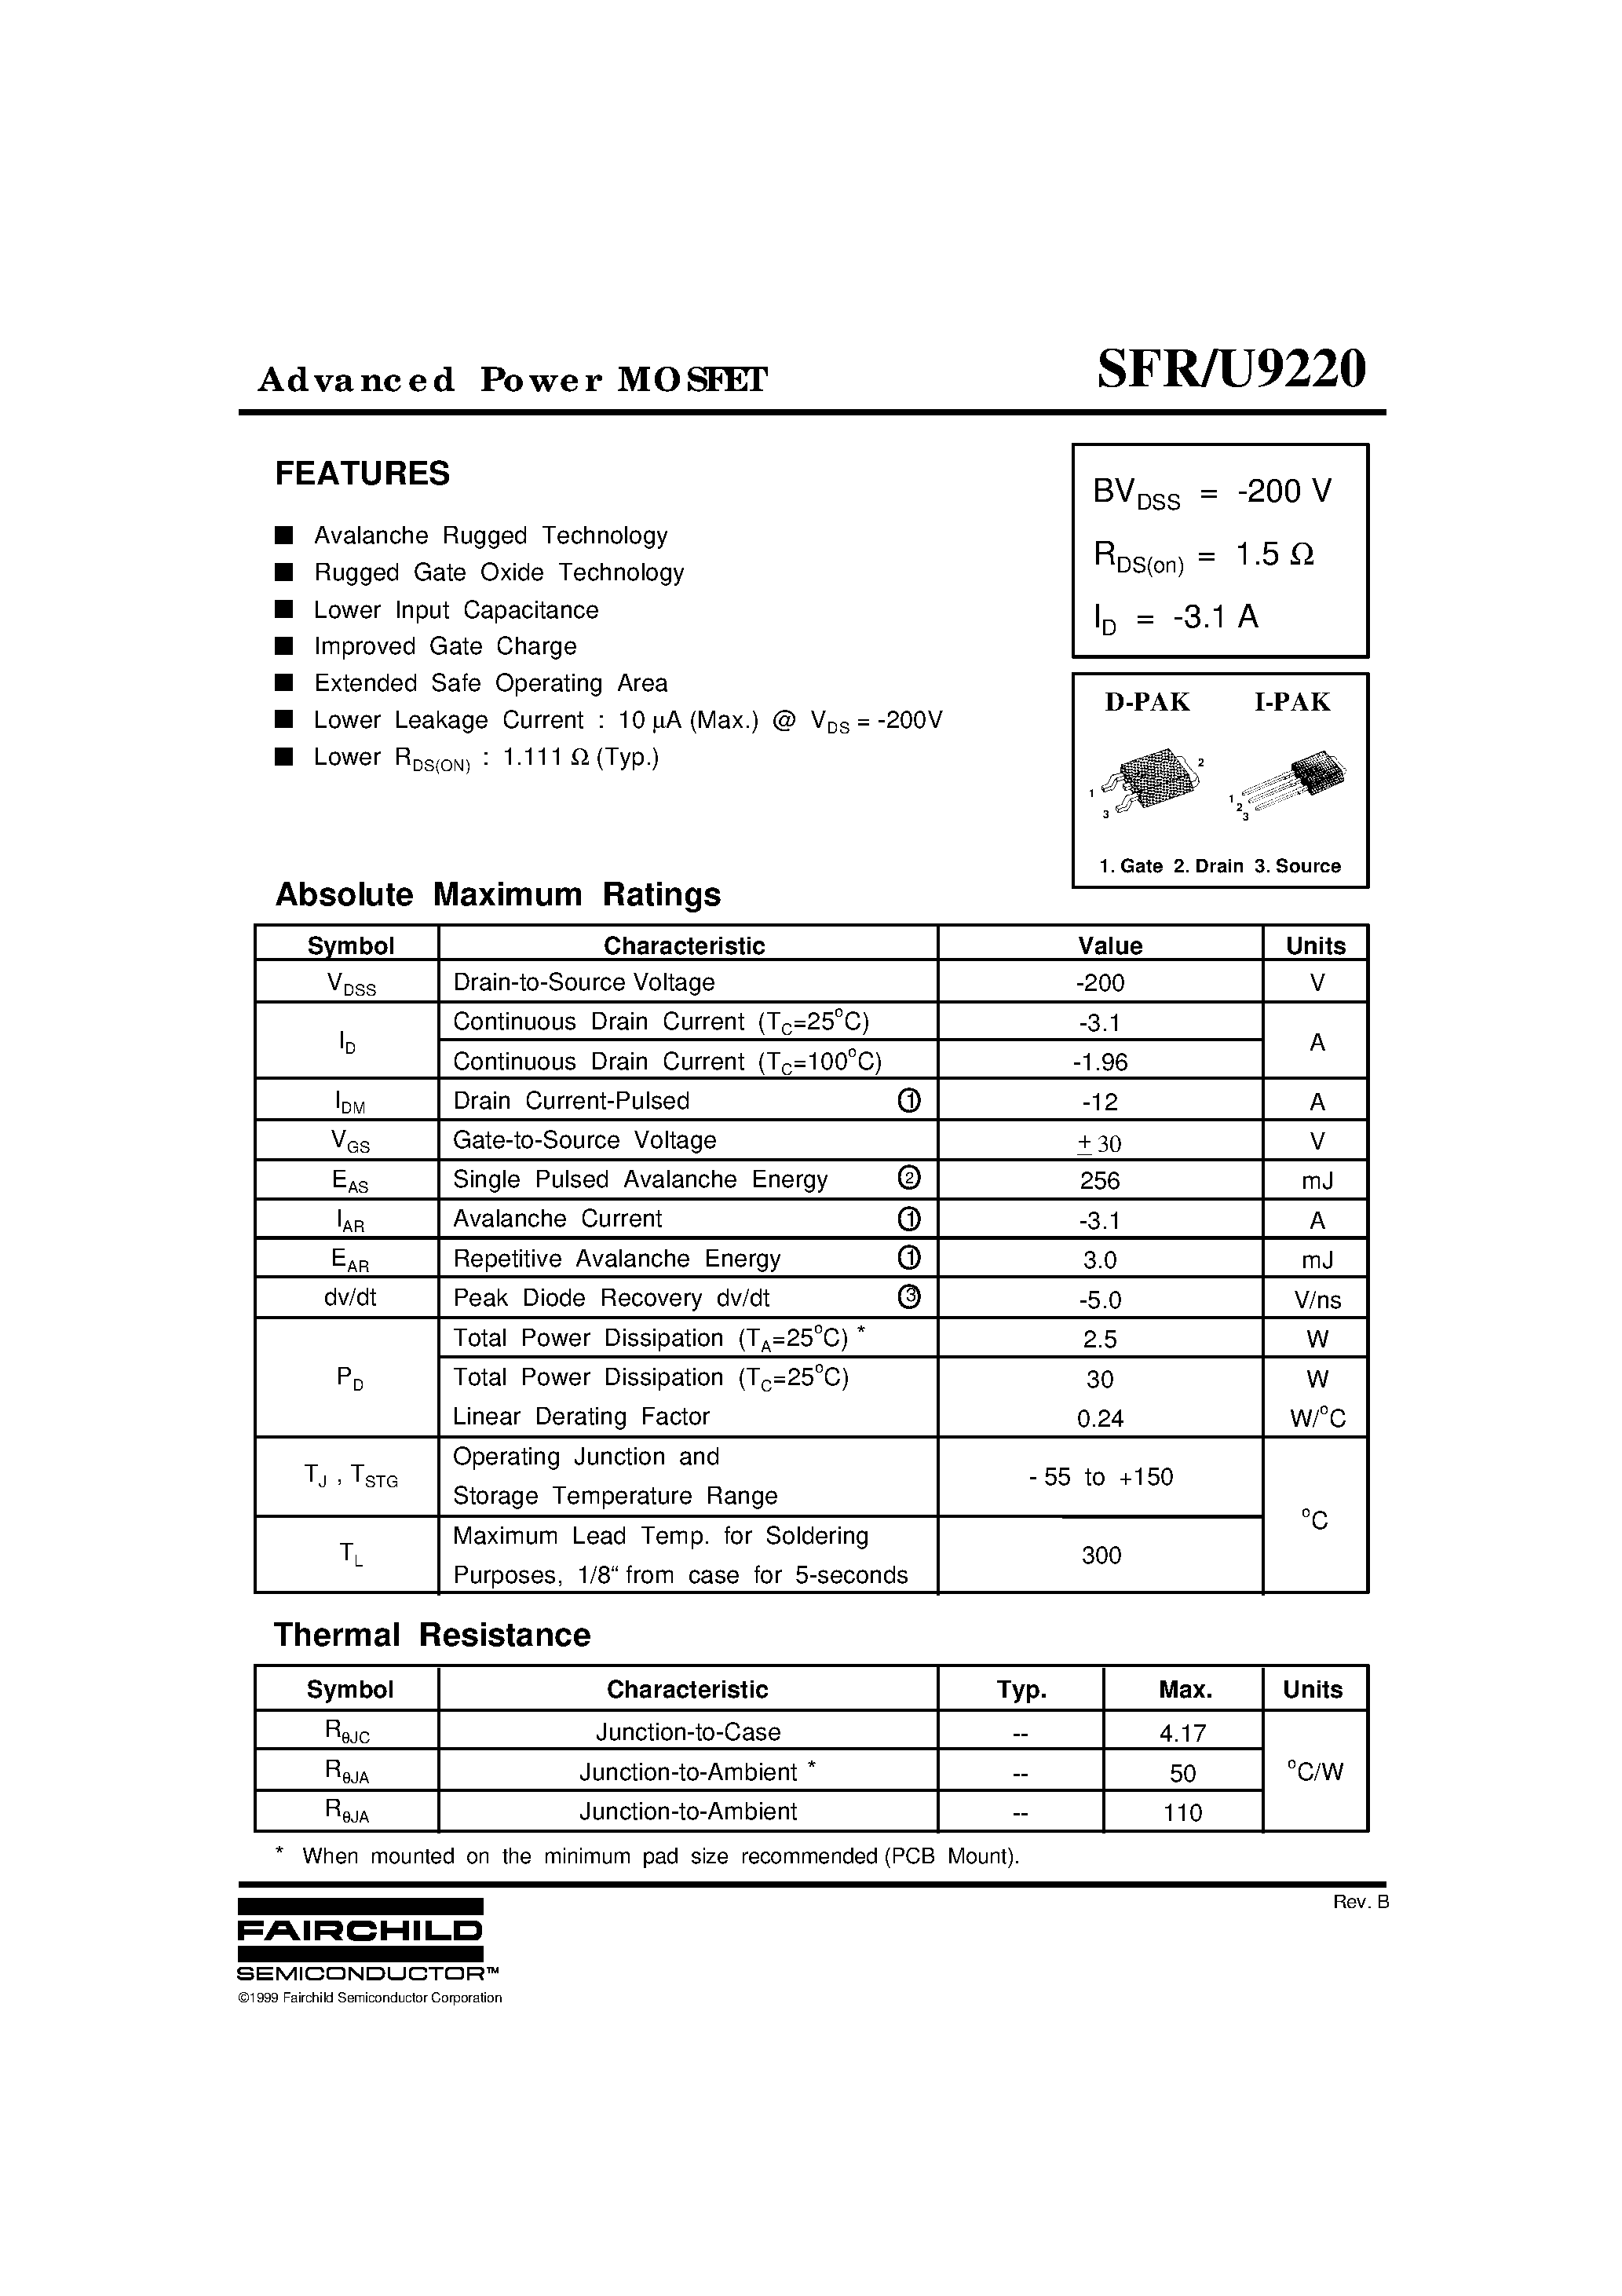 Datasheet SFR9220 - Advanced Power MOSFET page 1